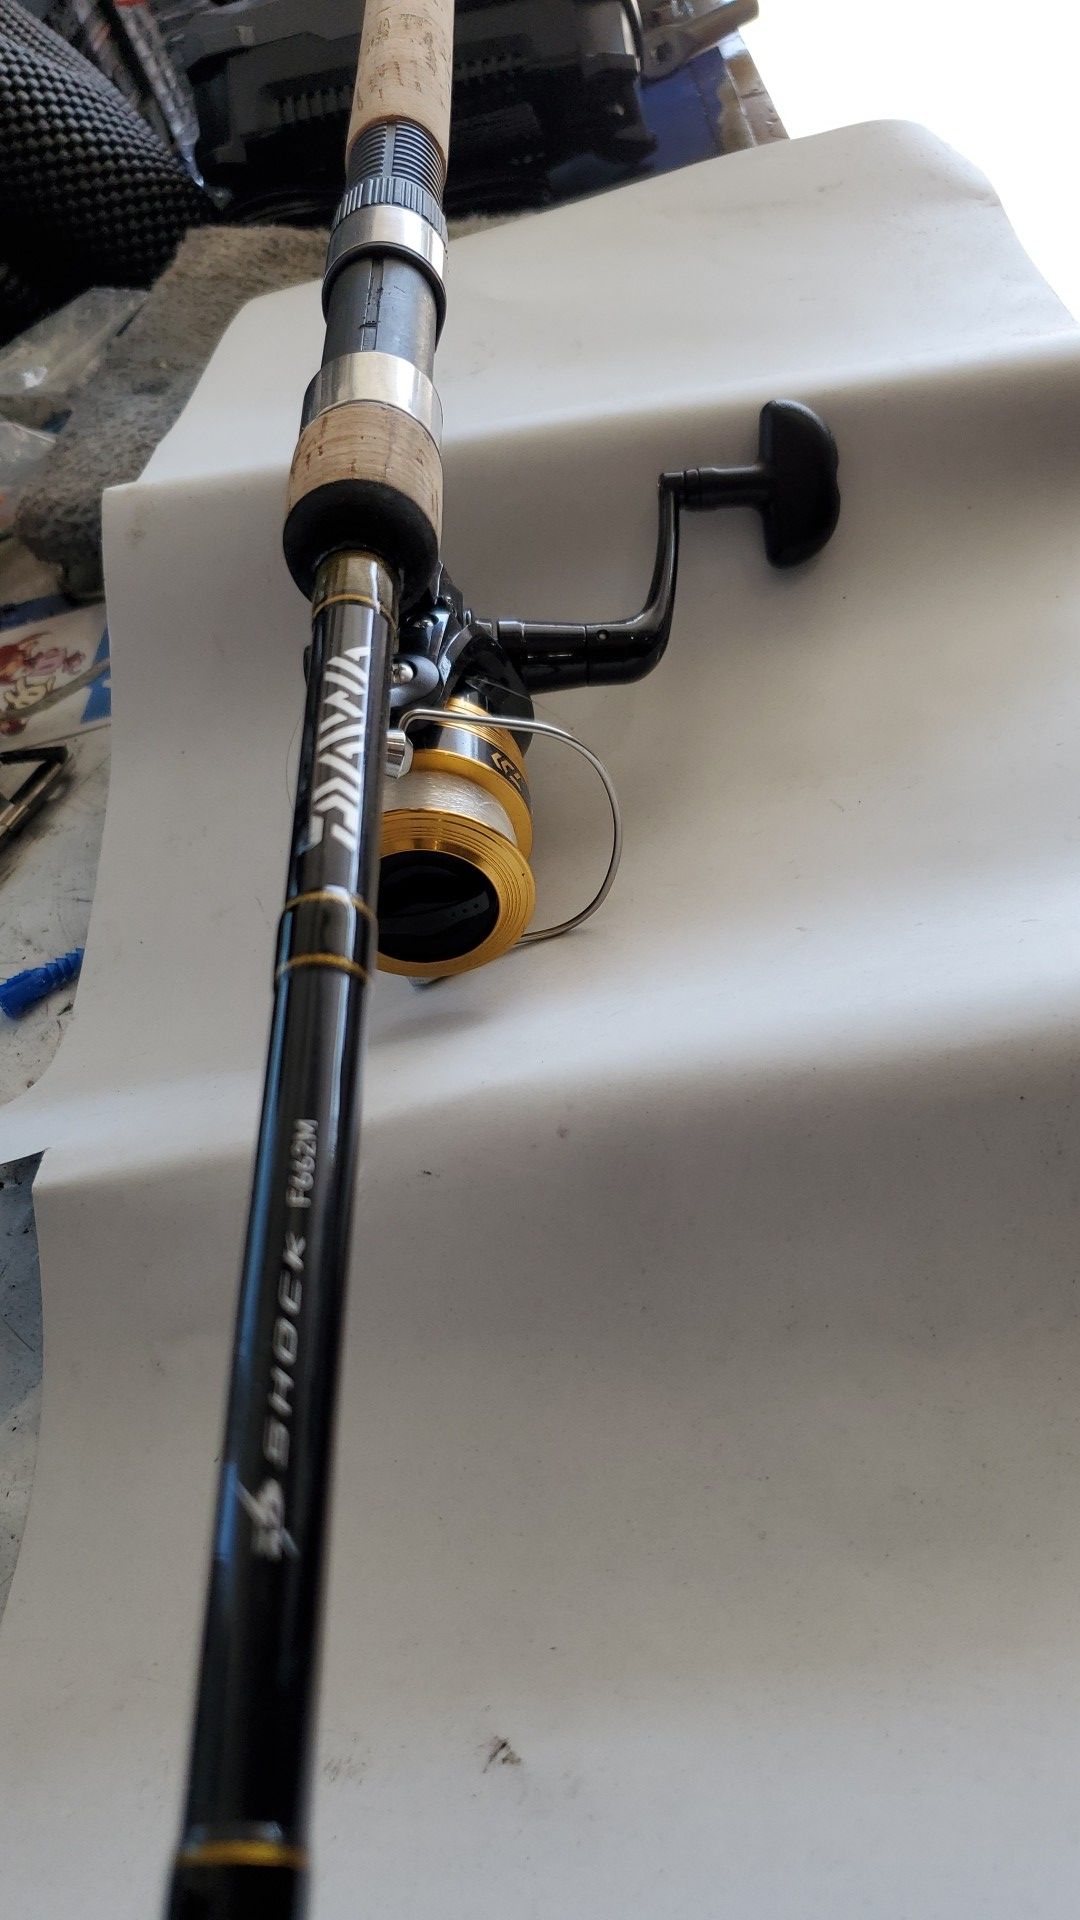 Fishing rod, shock f662m, shock 2500b reel